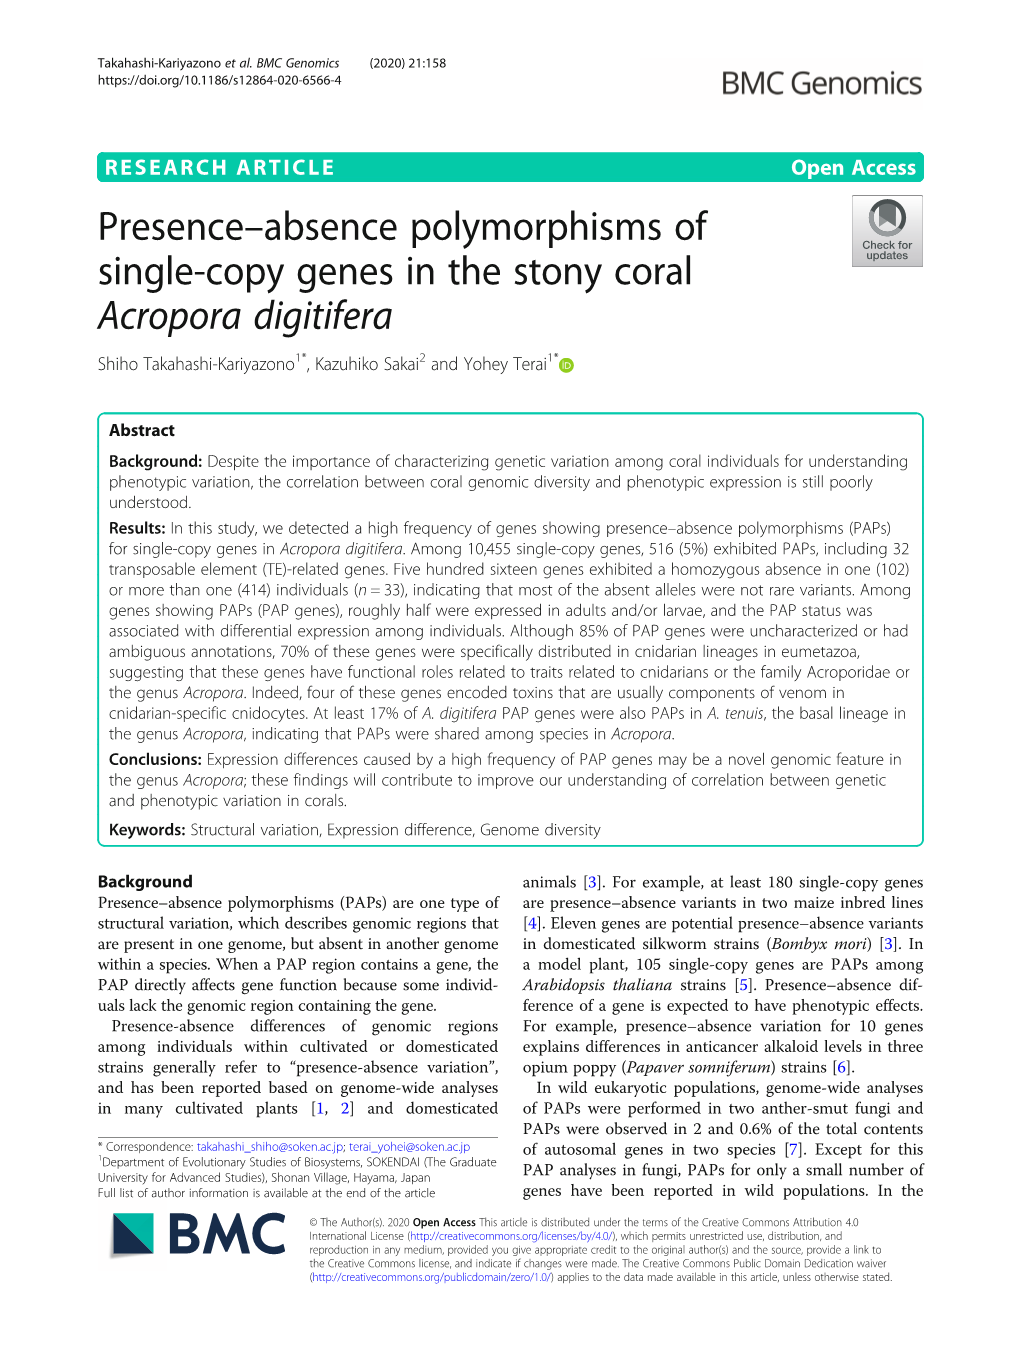 Presence–Absence Polymorphisms of Single-Copy Genes in the Stony Coral Acropora Digitifera Shiho Takahashi-Kariyazono1*, Kazuhiko Sakai2 and Yohey Terai1*